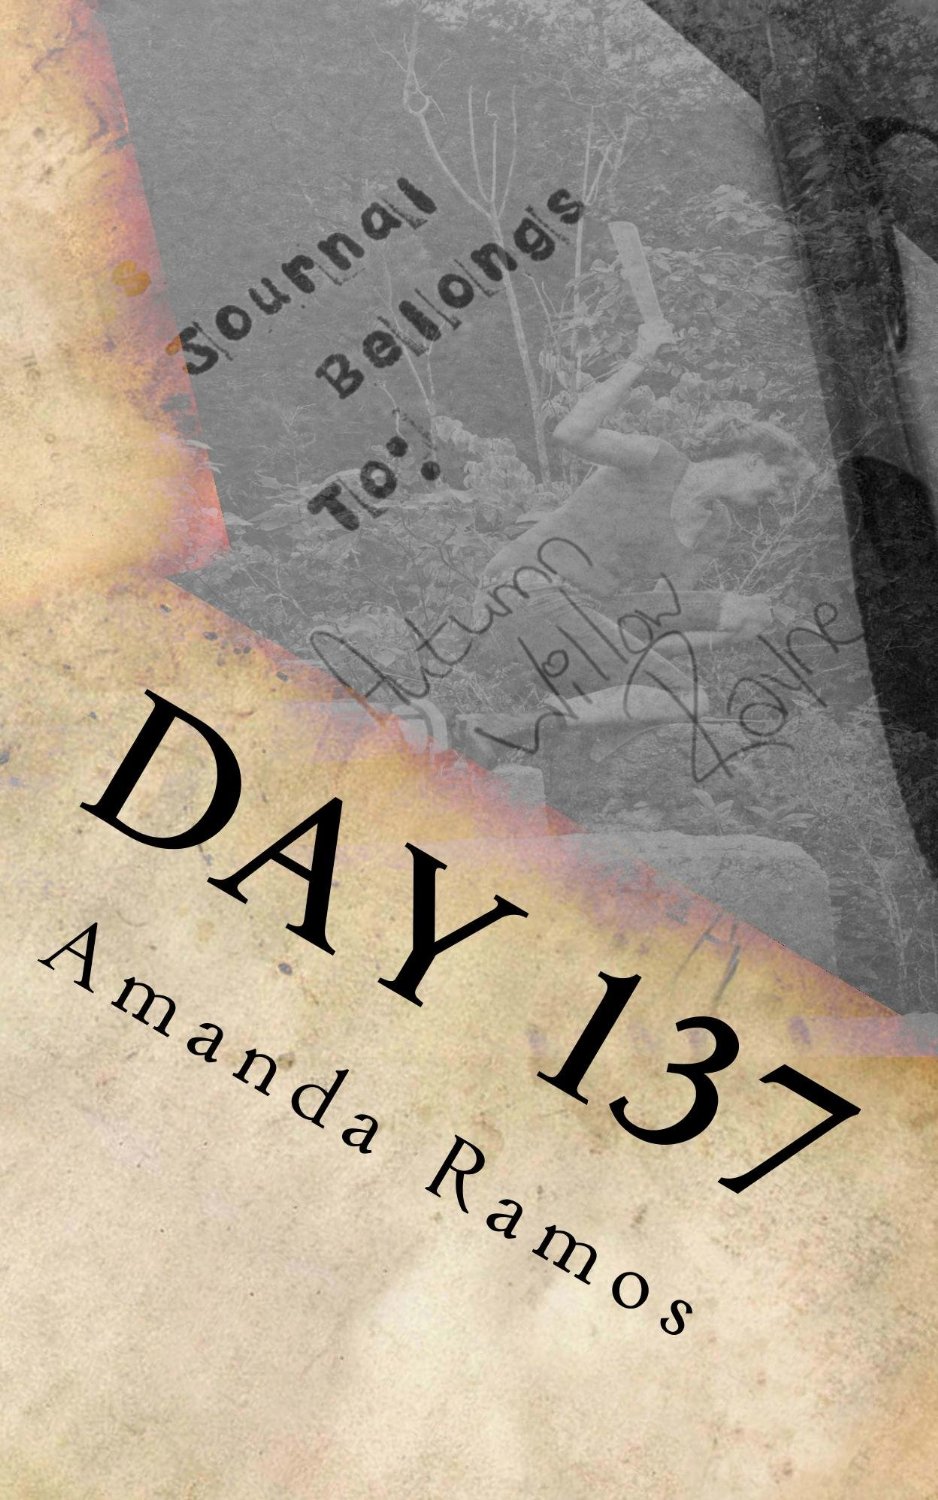 Day 137 by Amanda Ramos